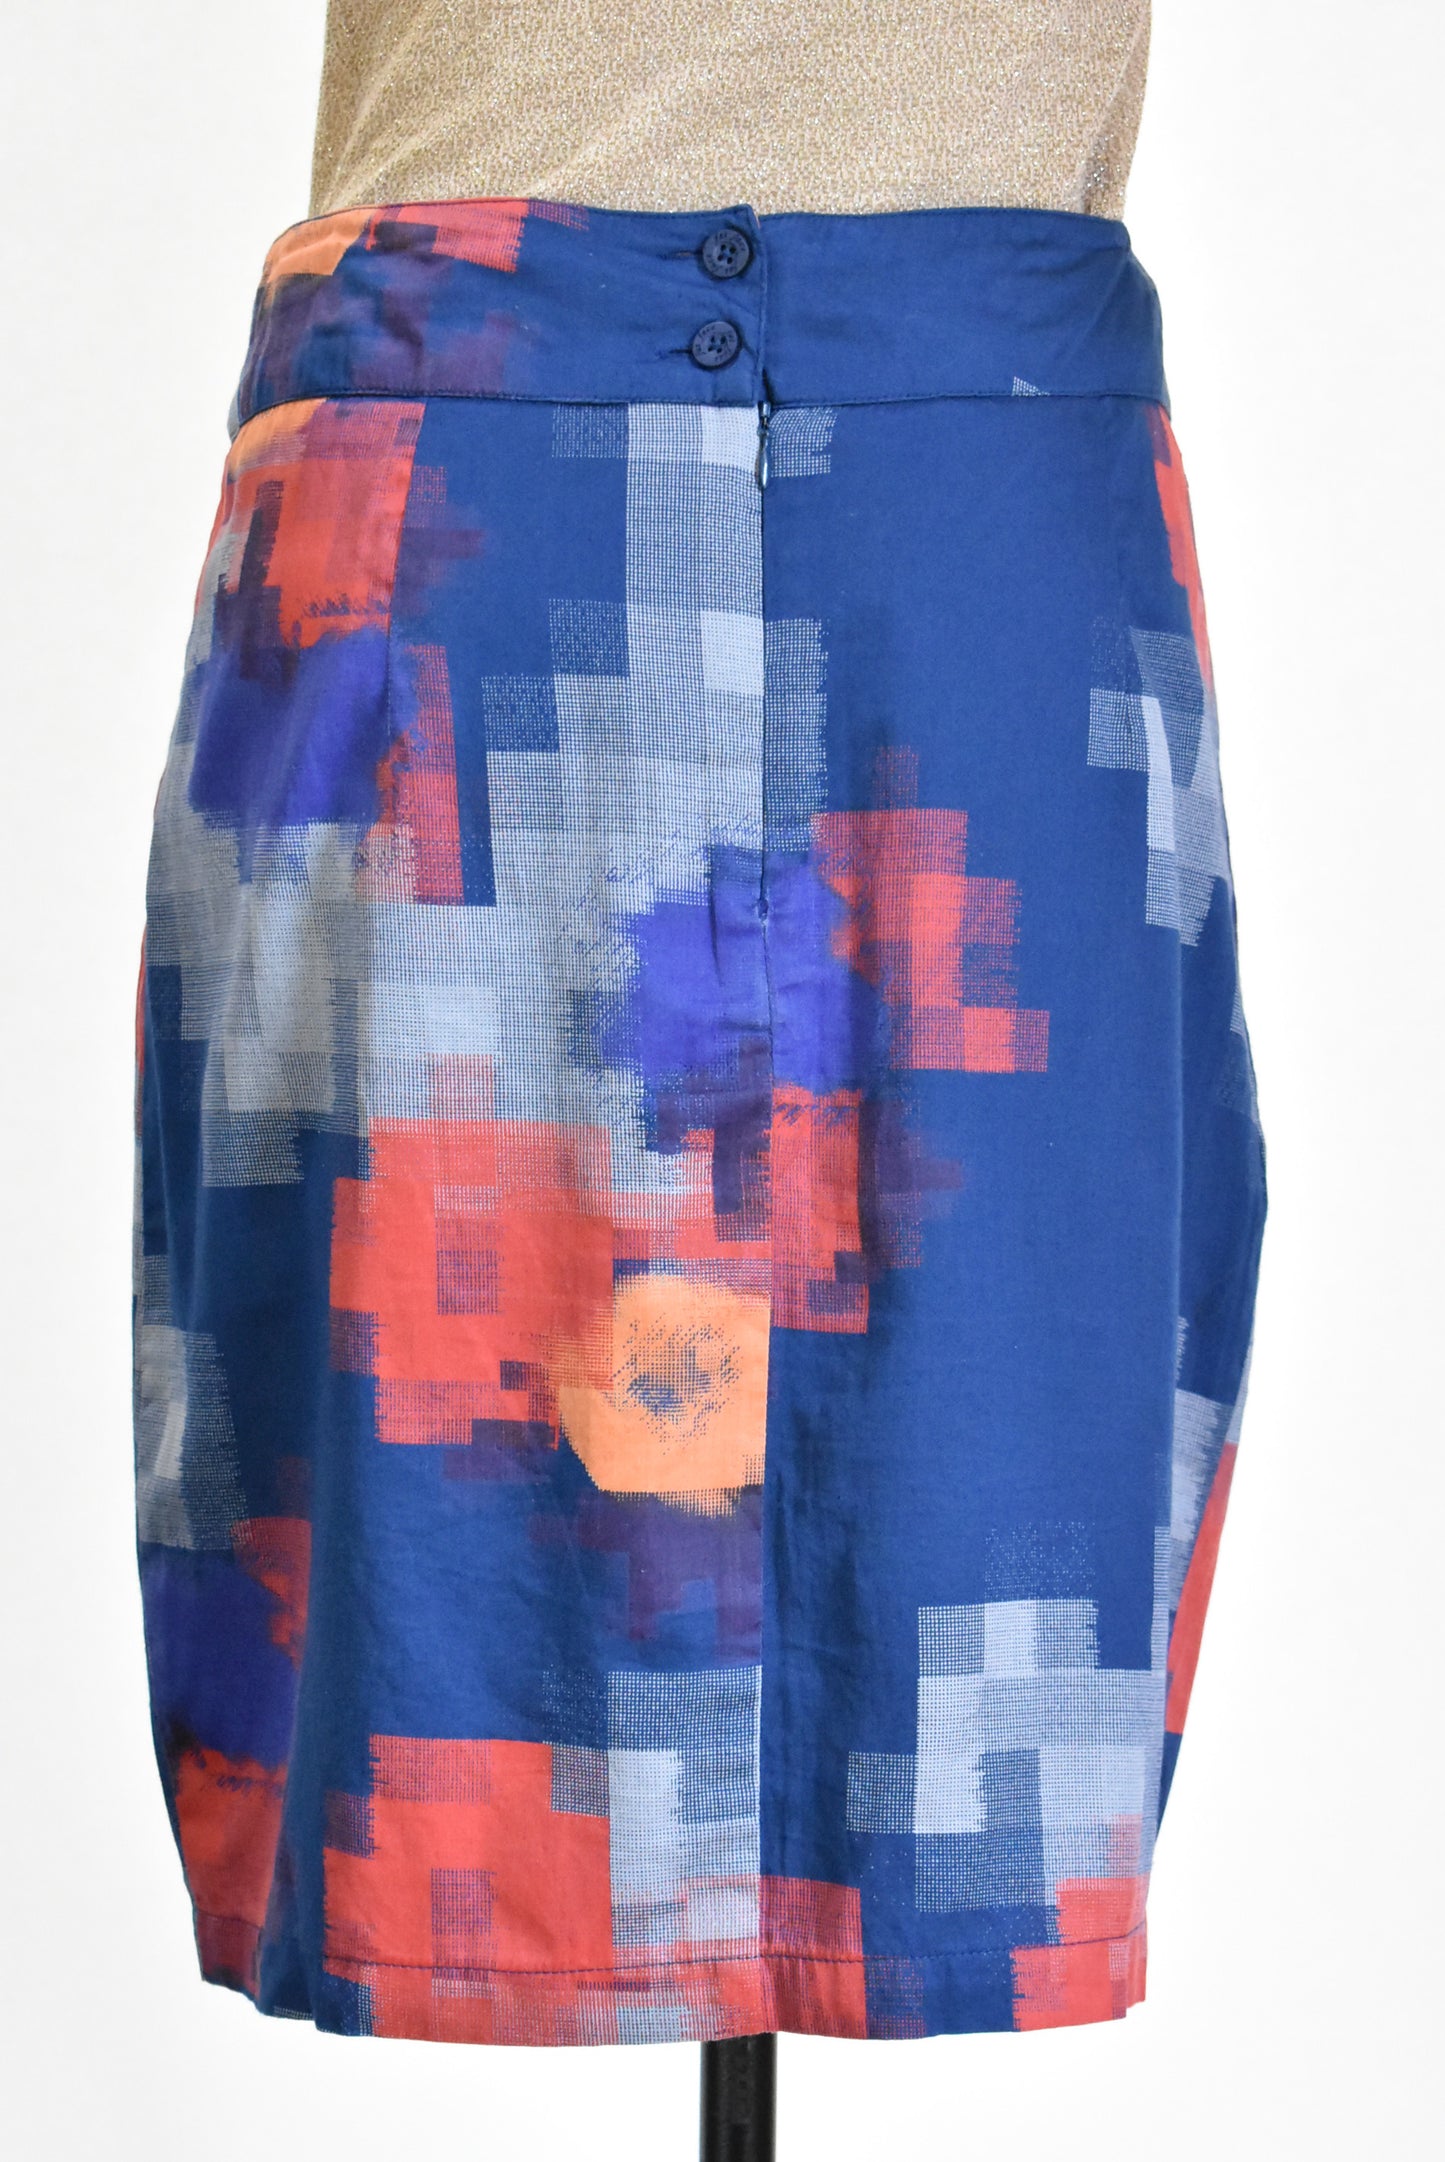 Fatface cotton tulip skirt, 12